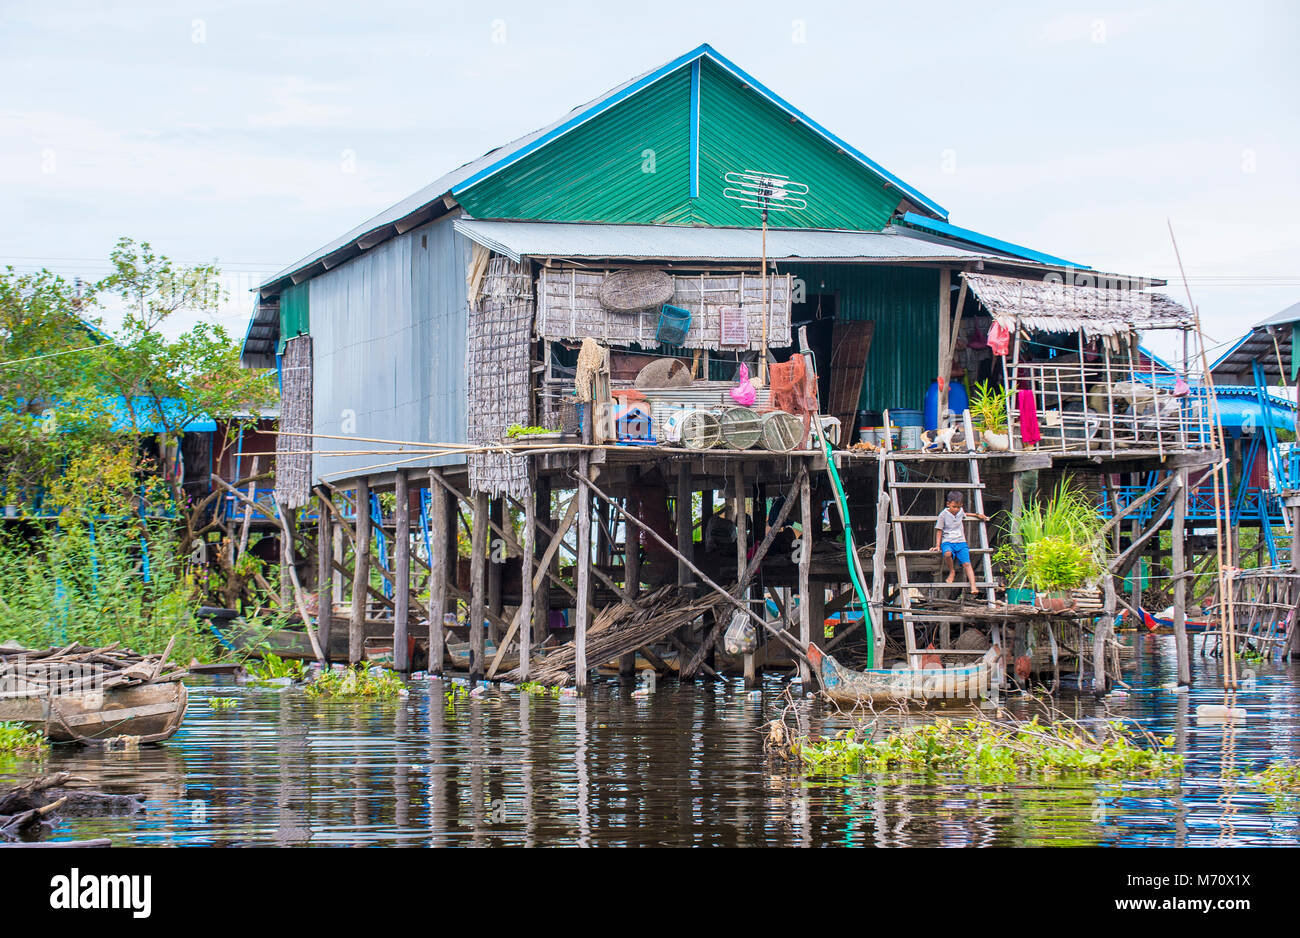 TONLE SAP, Kambodscha - Okt 18: Traditionelle hölzerne Pfahlbauten in den Tonle Sap See Kambodscha am 18. Oktober 2017. Tonle Sap ist der größte See in Sou Stockfoto